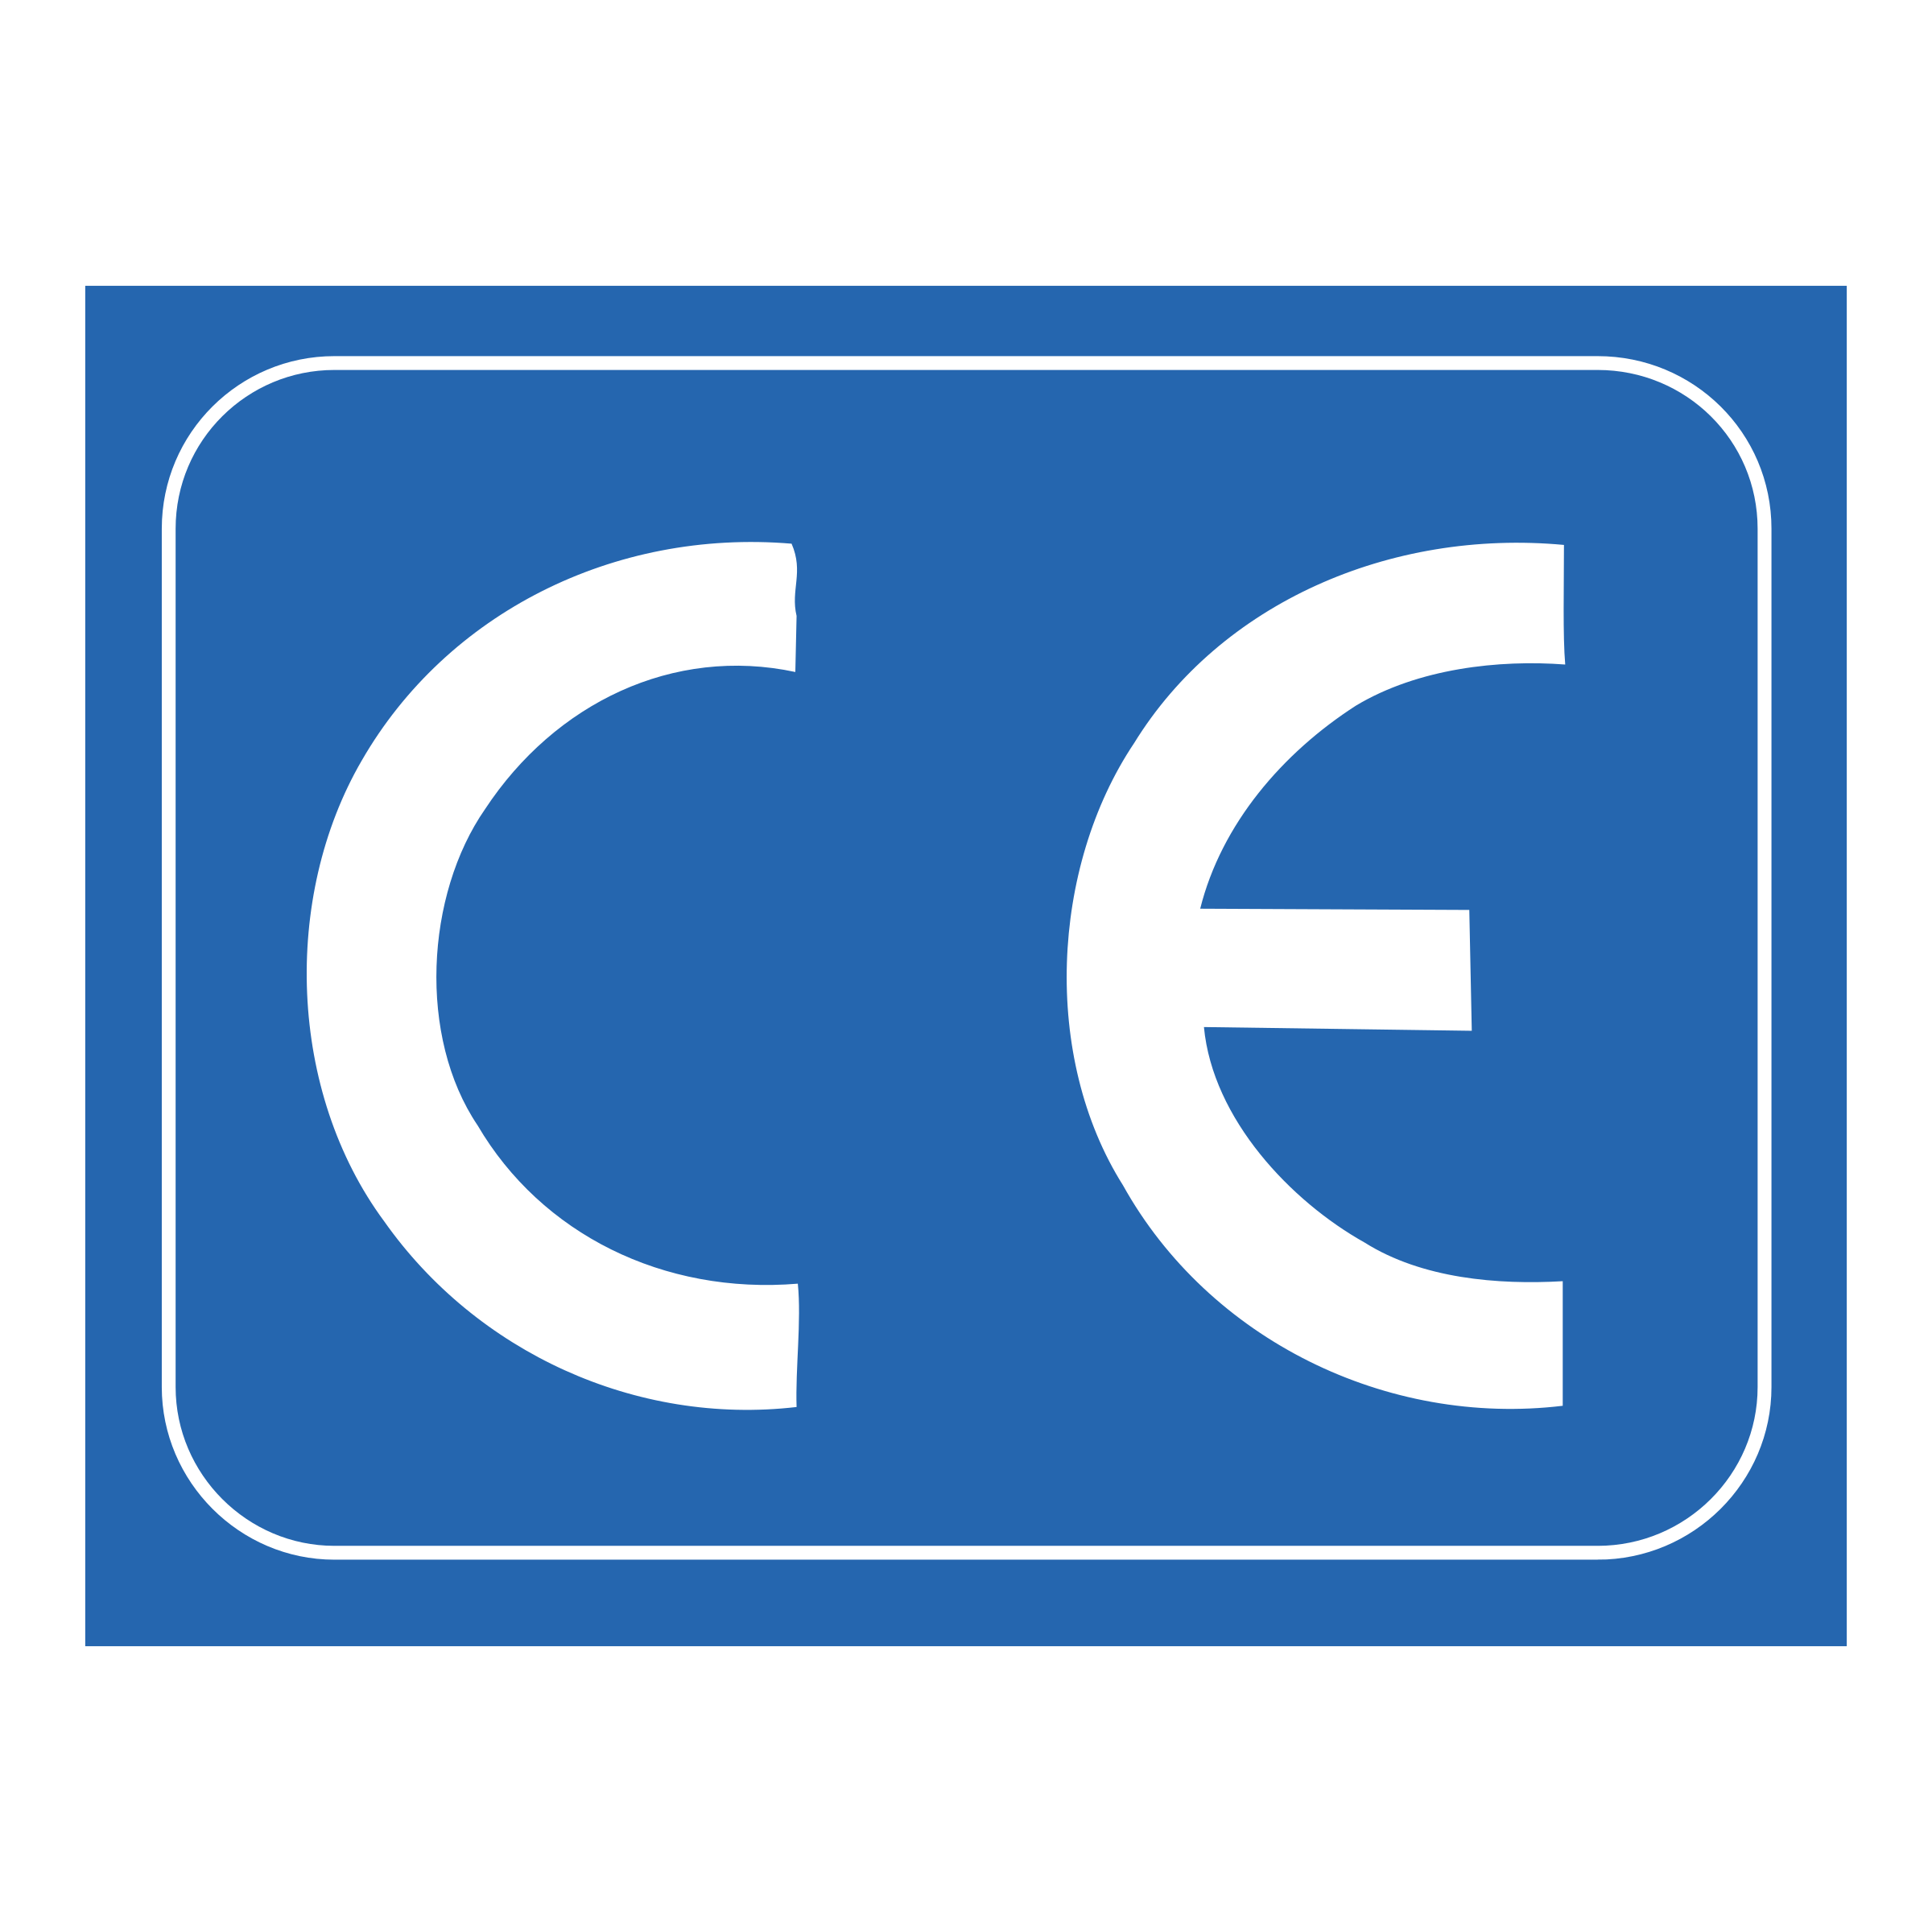 Ce (знак). Значок сертификации се. Знак европейского соответствия. Знак сертификат Европейский.